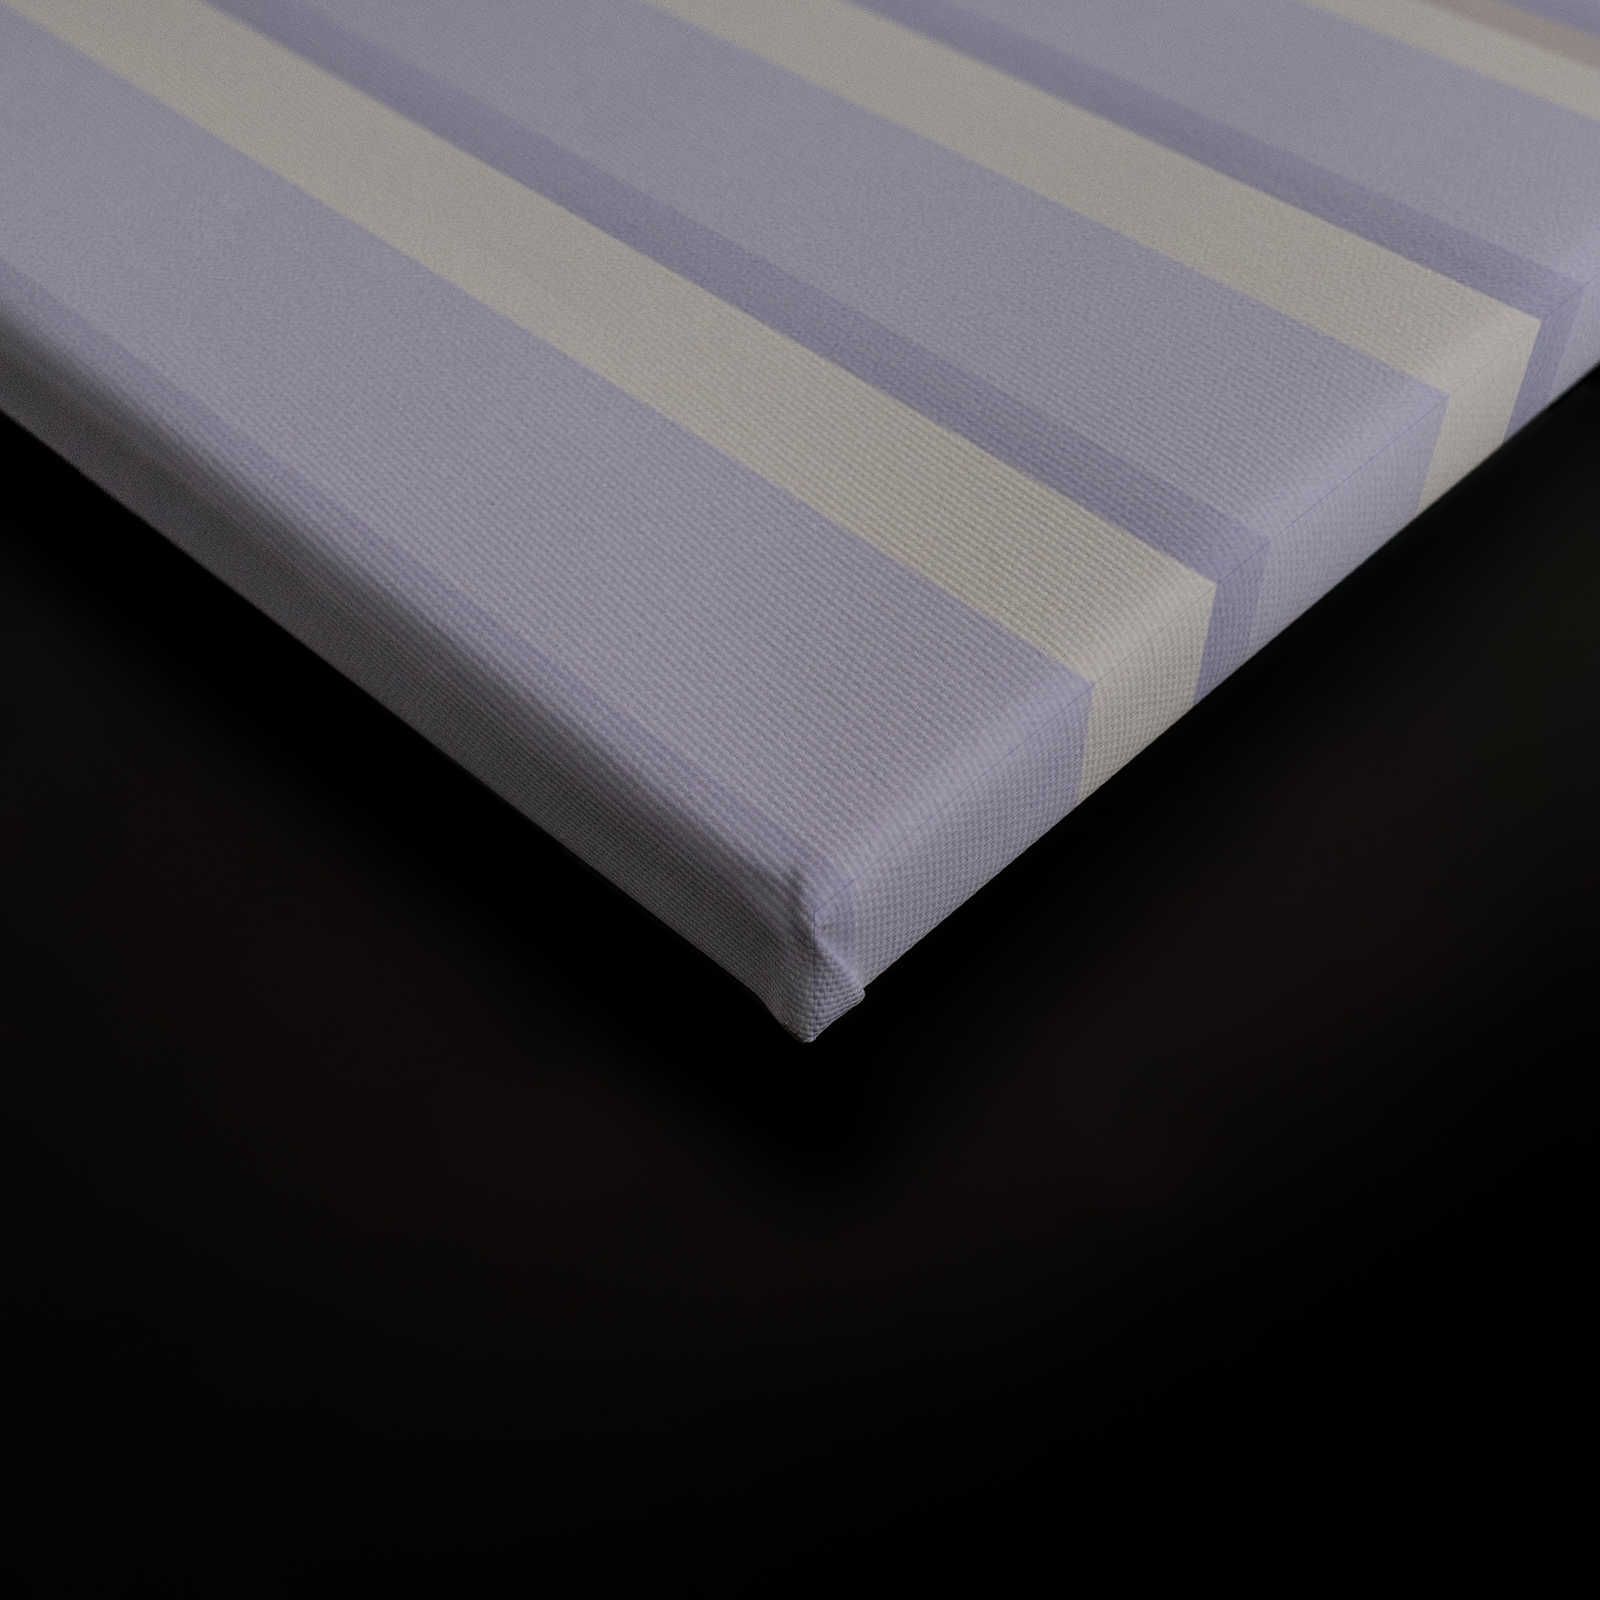             Illusion Room 1 - Canvas schilderij 3D Stripe Design in Purple & Grey - 0.90 m x 0.60 m
        